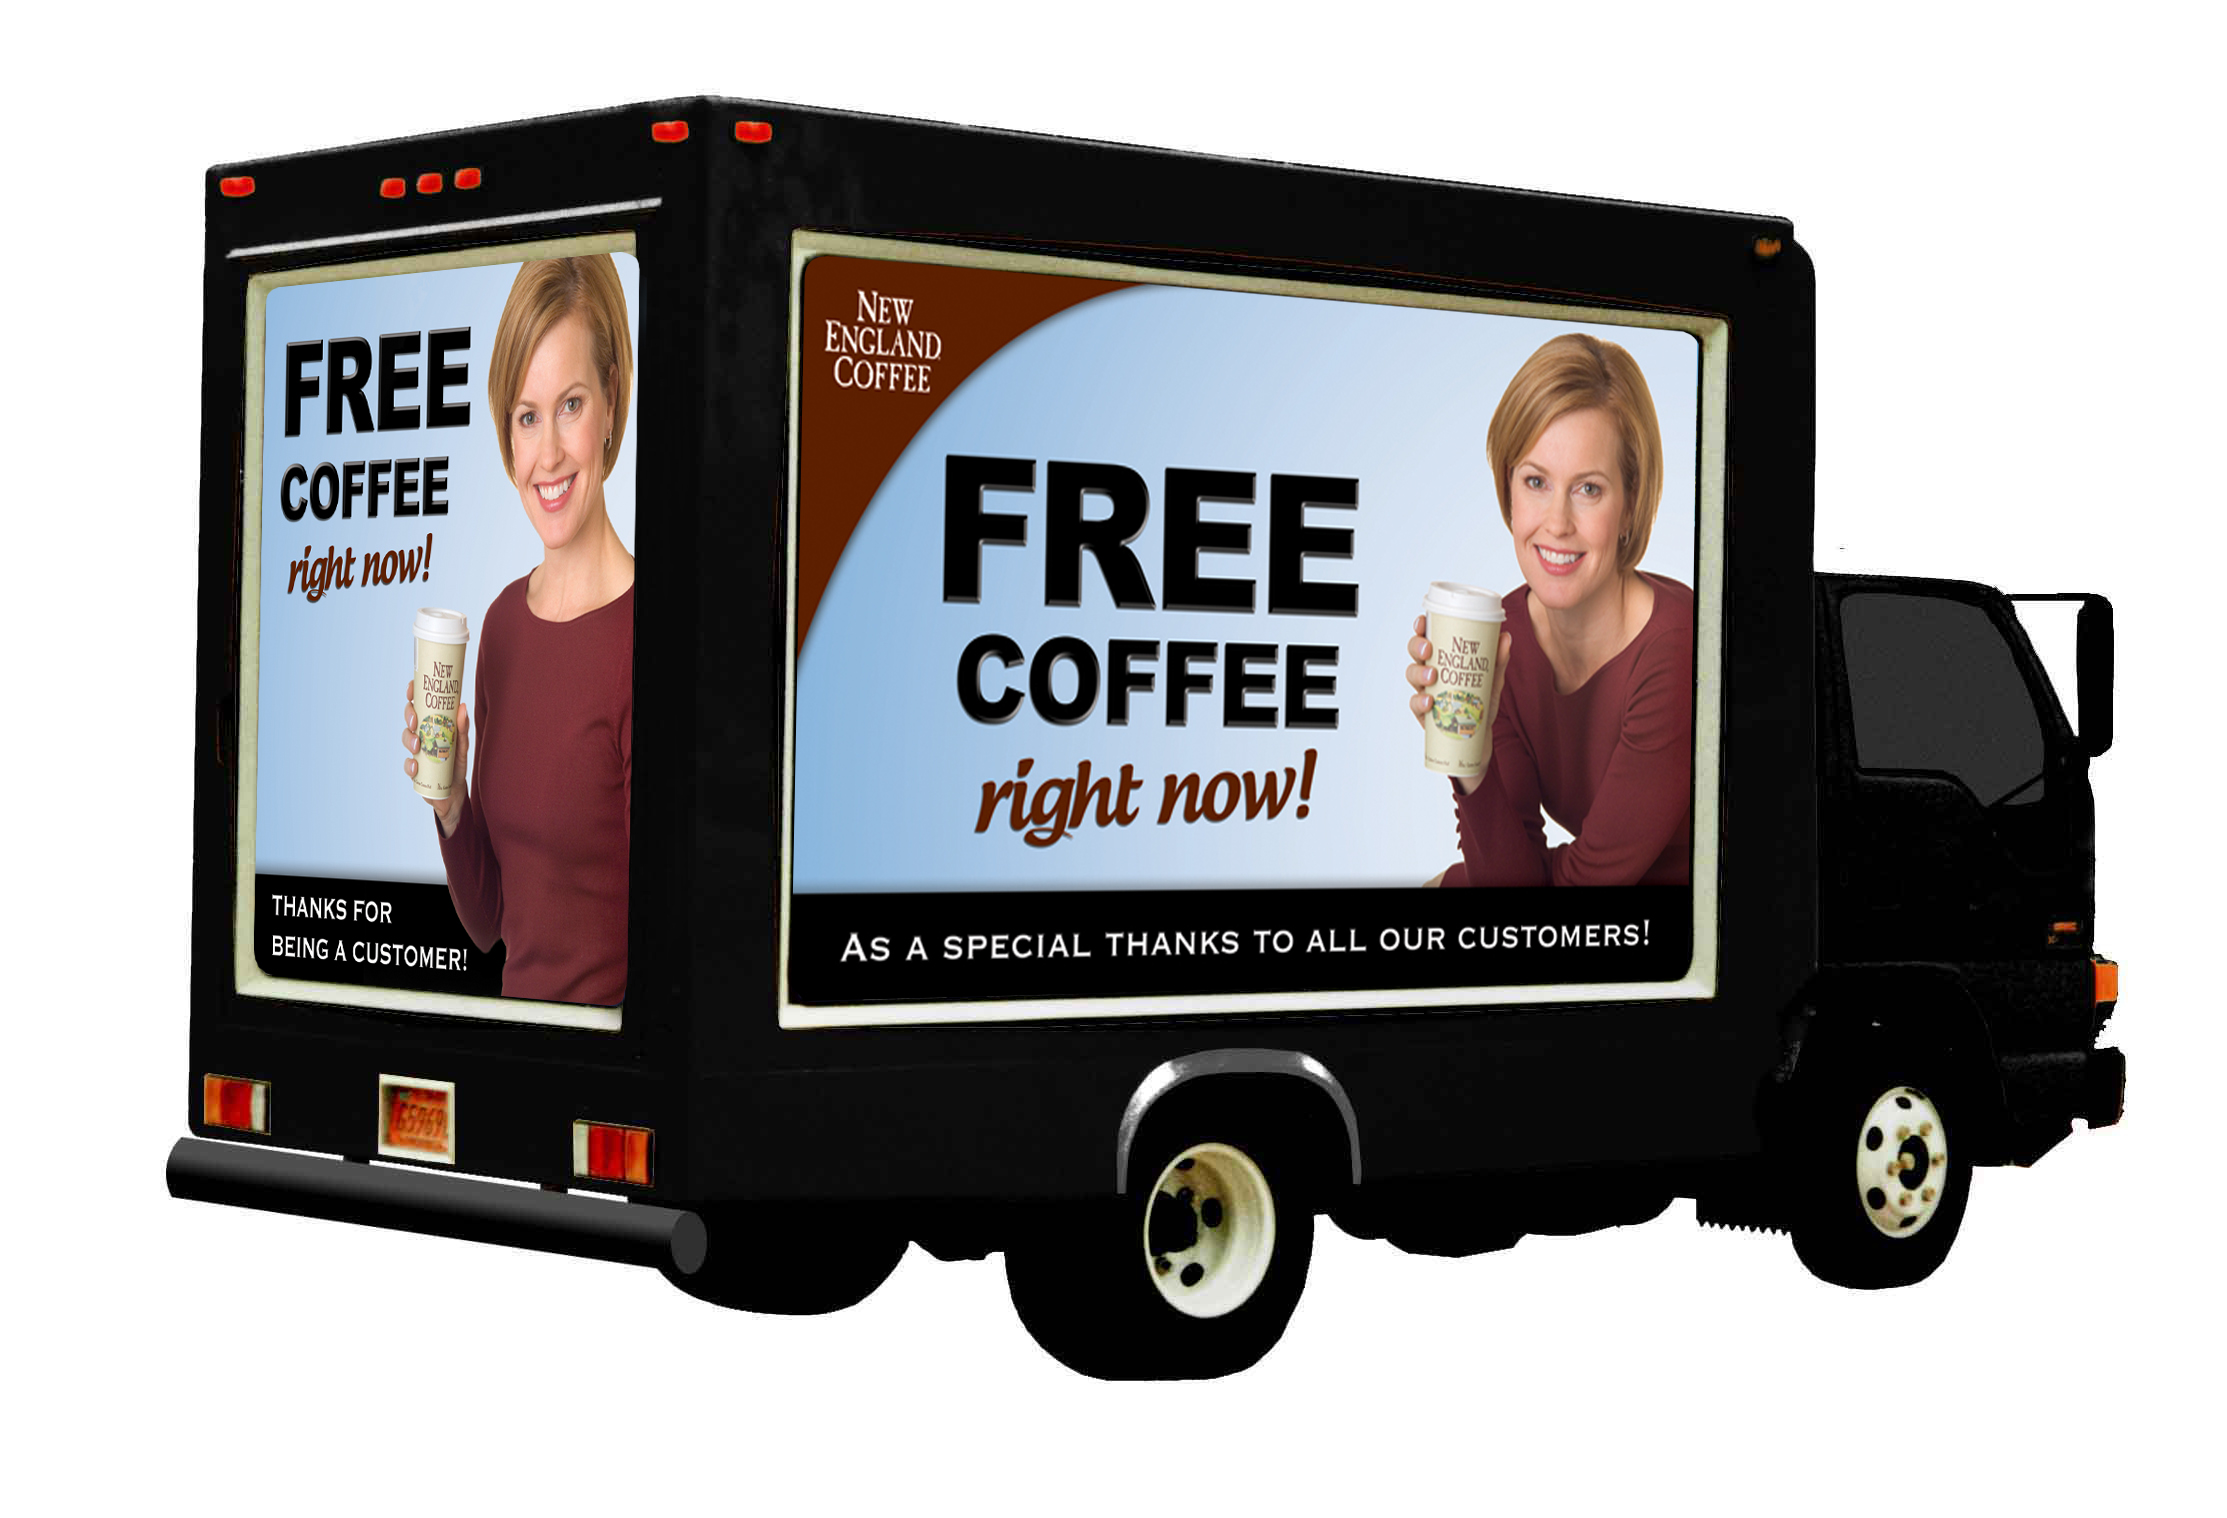 New England Coffee promo